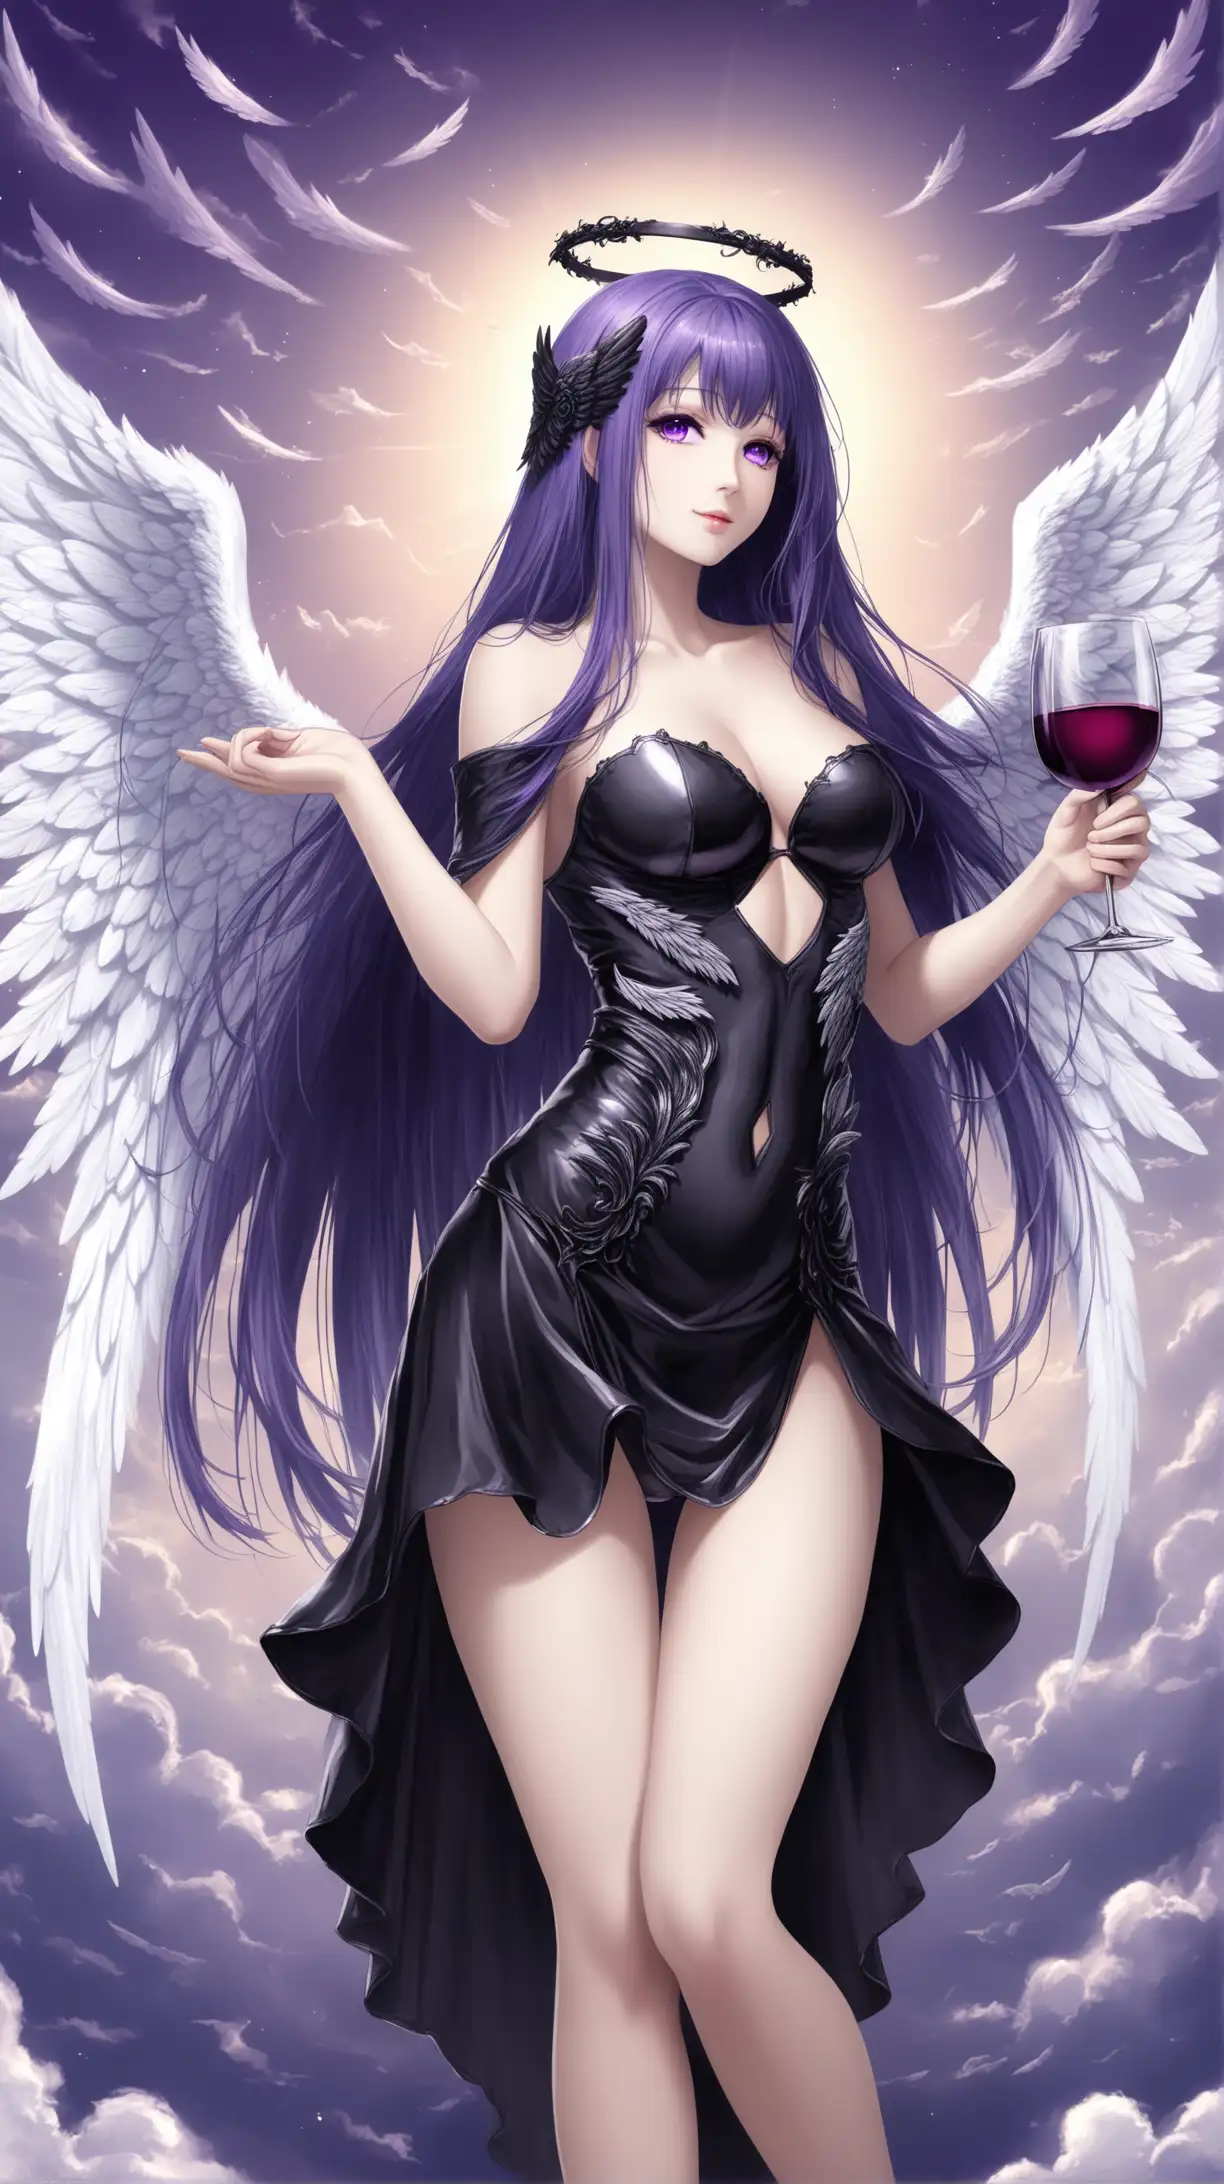 Sexy girl carry wine glass, black angel costume, white wing, purple long hair, medium short, heaven background.